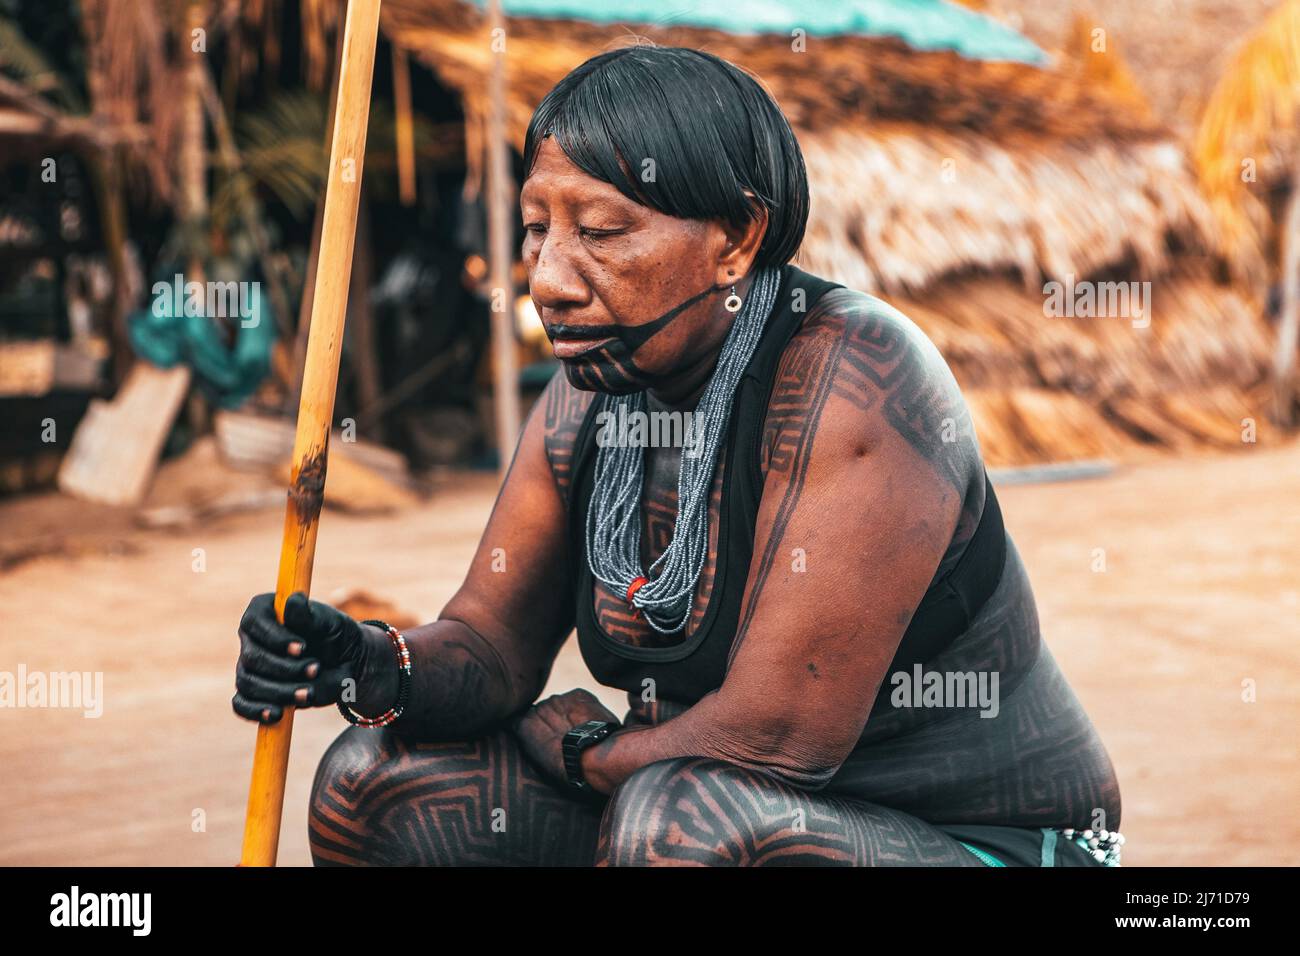 Indian woman, leader of an Amazon tribe in Brazil. Strong female role model. Baixo Amazonas, Pará, Amazon, Brazil. Stock Photo